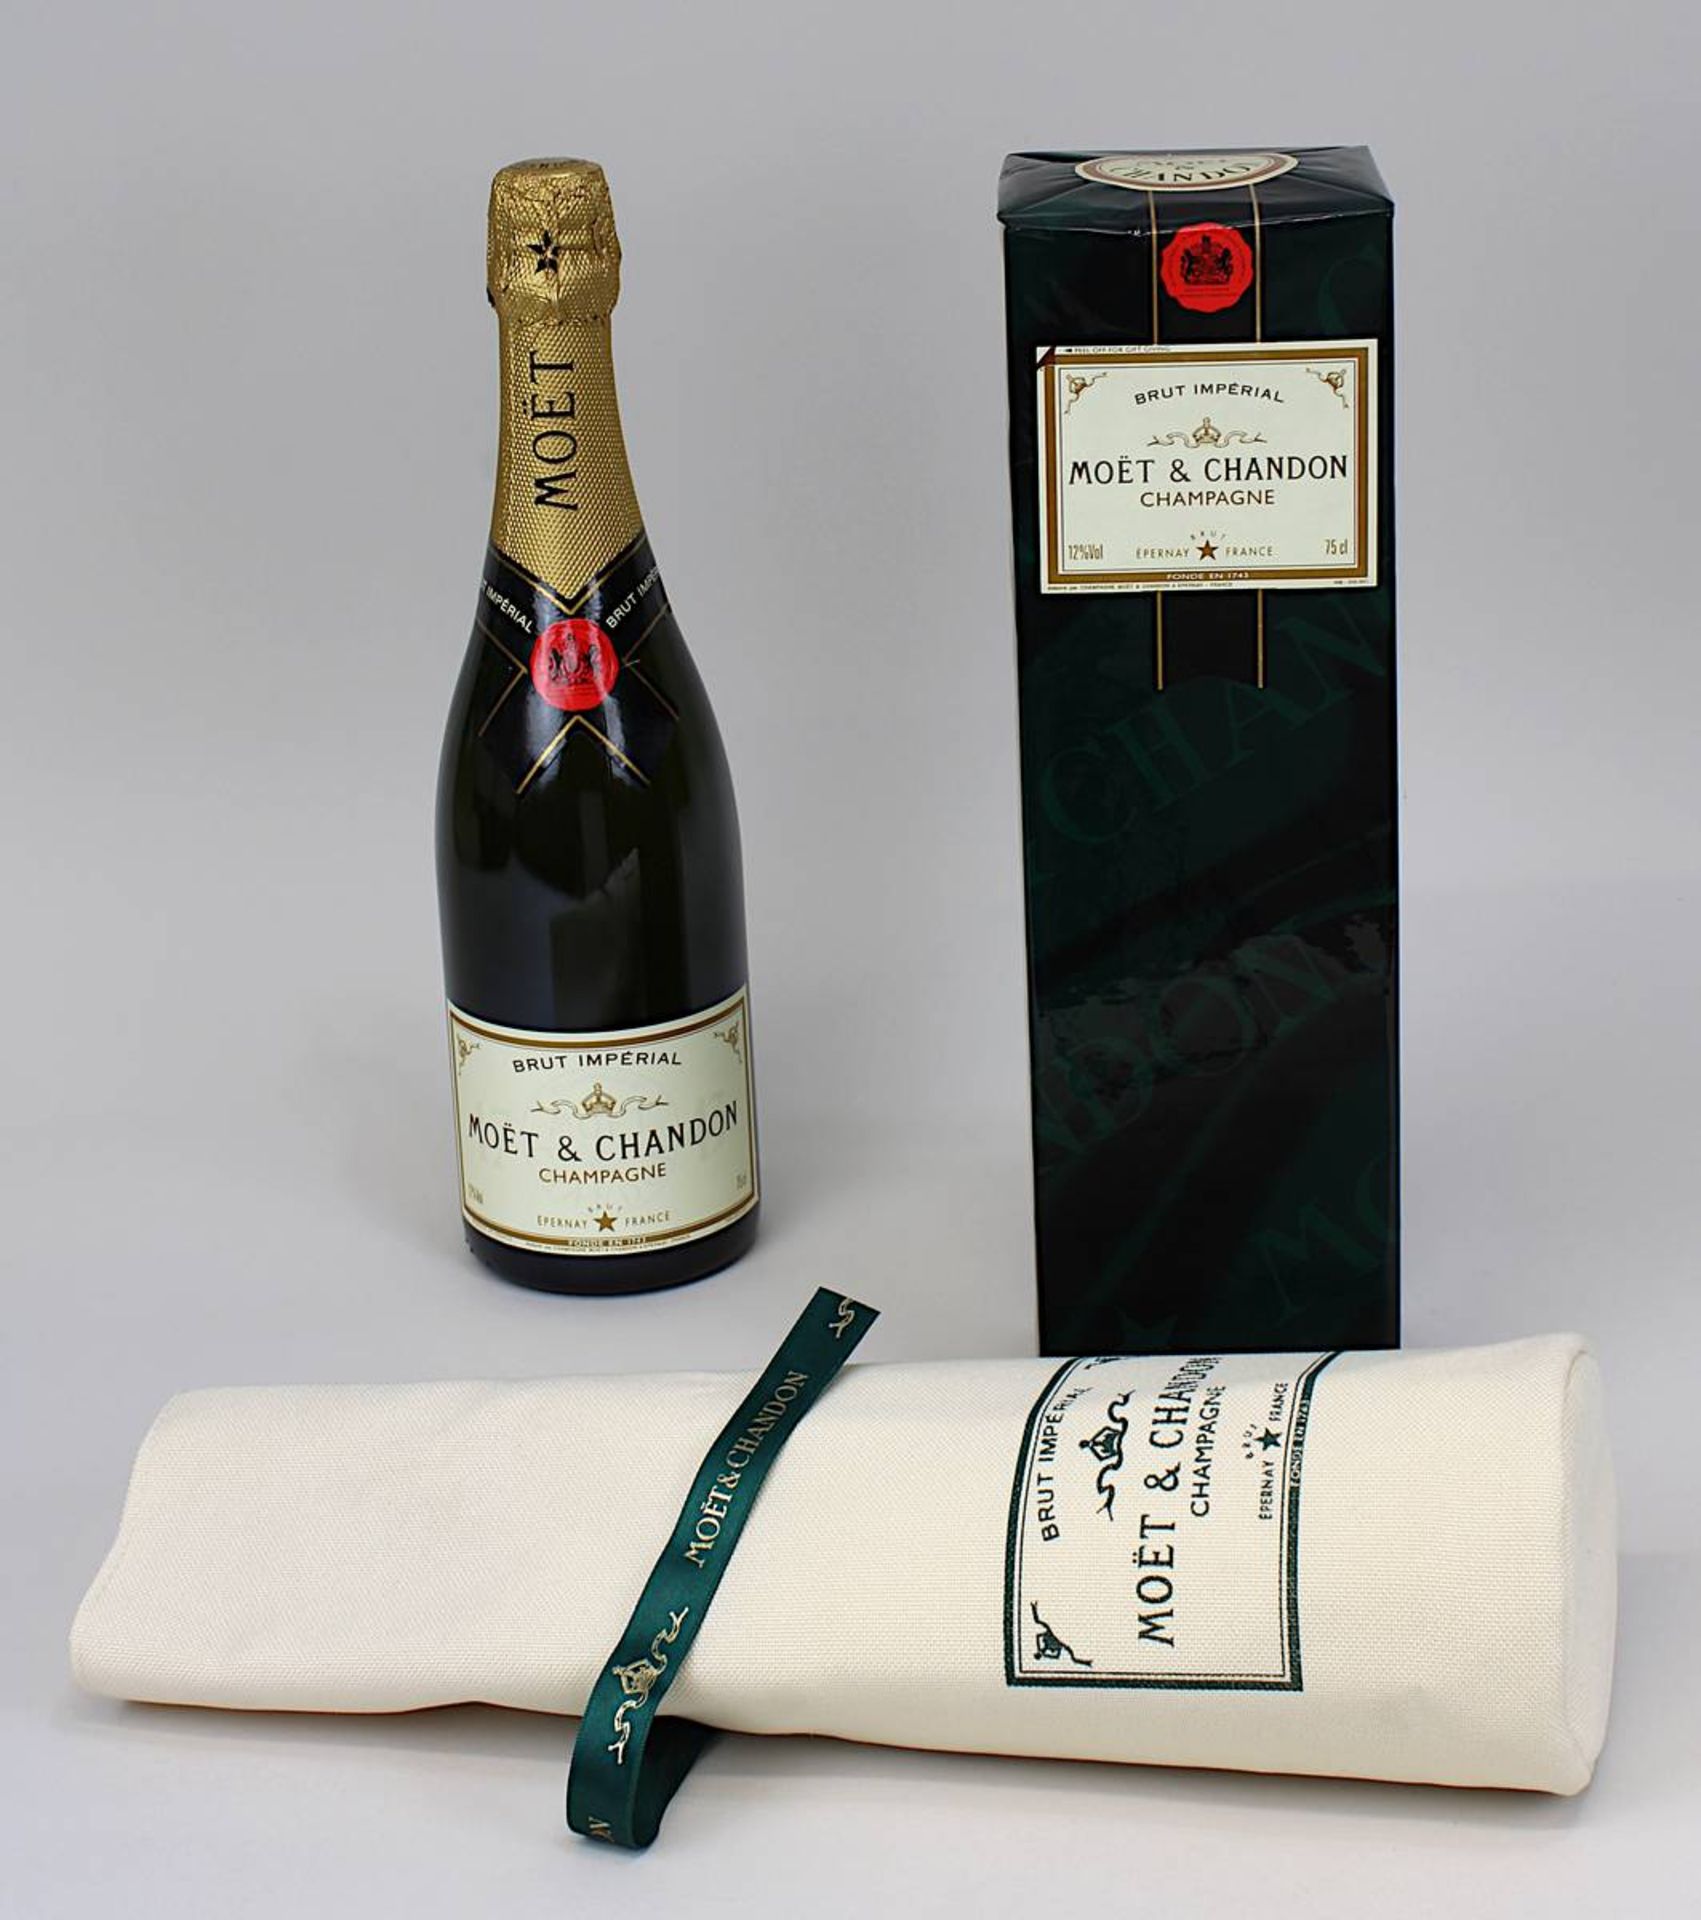 Zwei Flaschen Champagner: 1 Flasche Moet & Chandon, Brut Impérial, Èpernay, 1 Flasche im